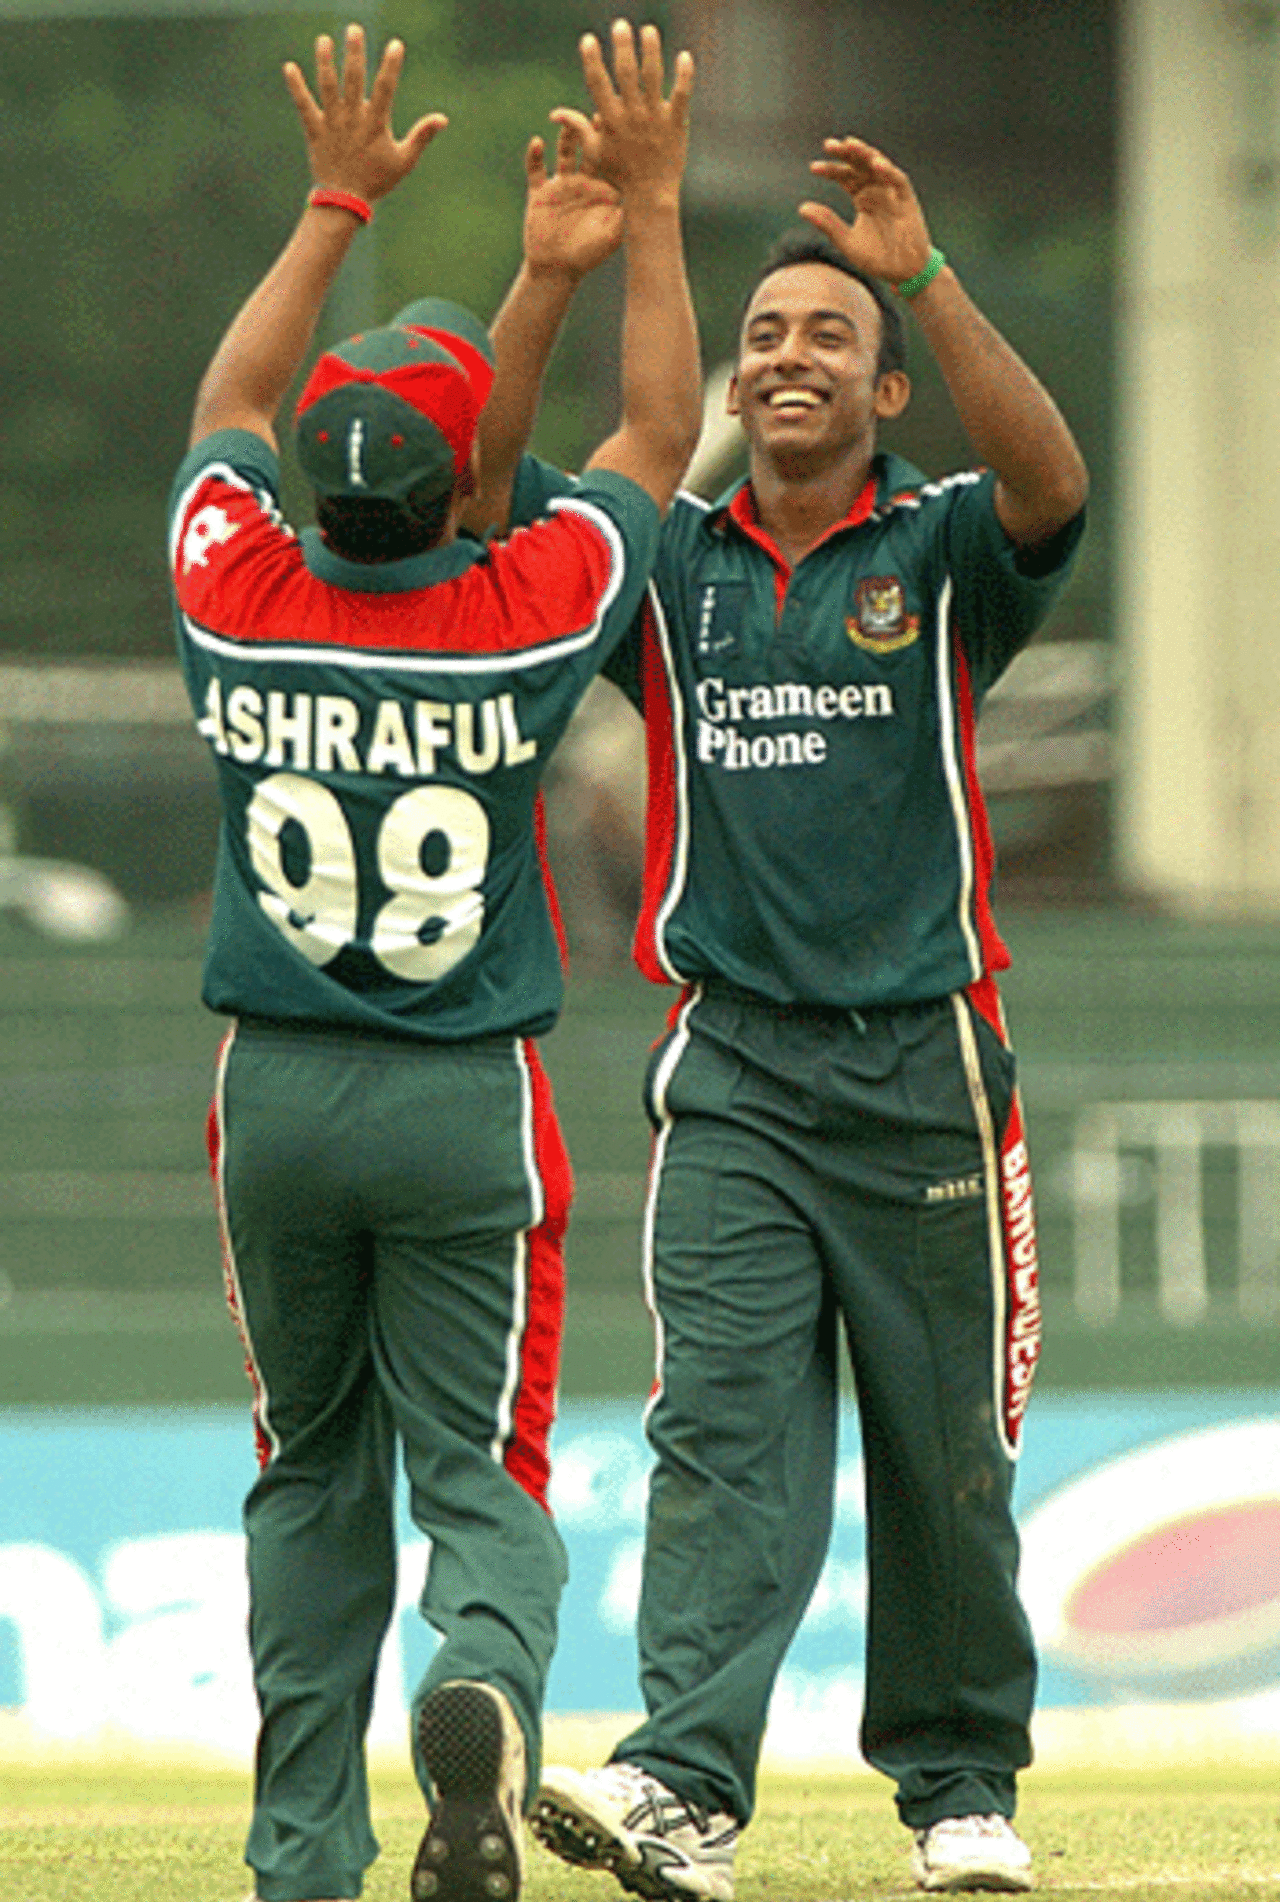 Aftab Ahmed is all smiles after dismissing Kumar Sangakkara, Sri Lanka v Bangladesh, Sinhalese Sports Club, Colombo, August 31, 2005